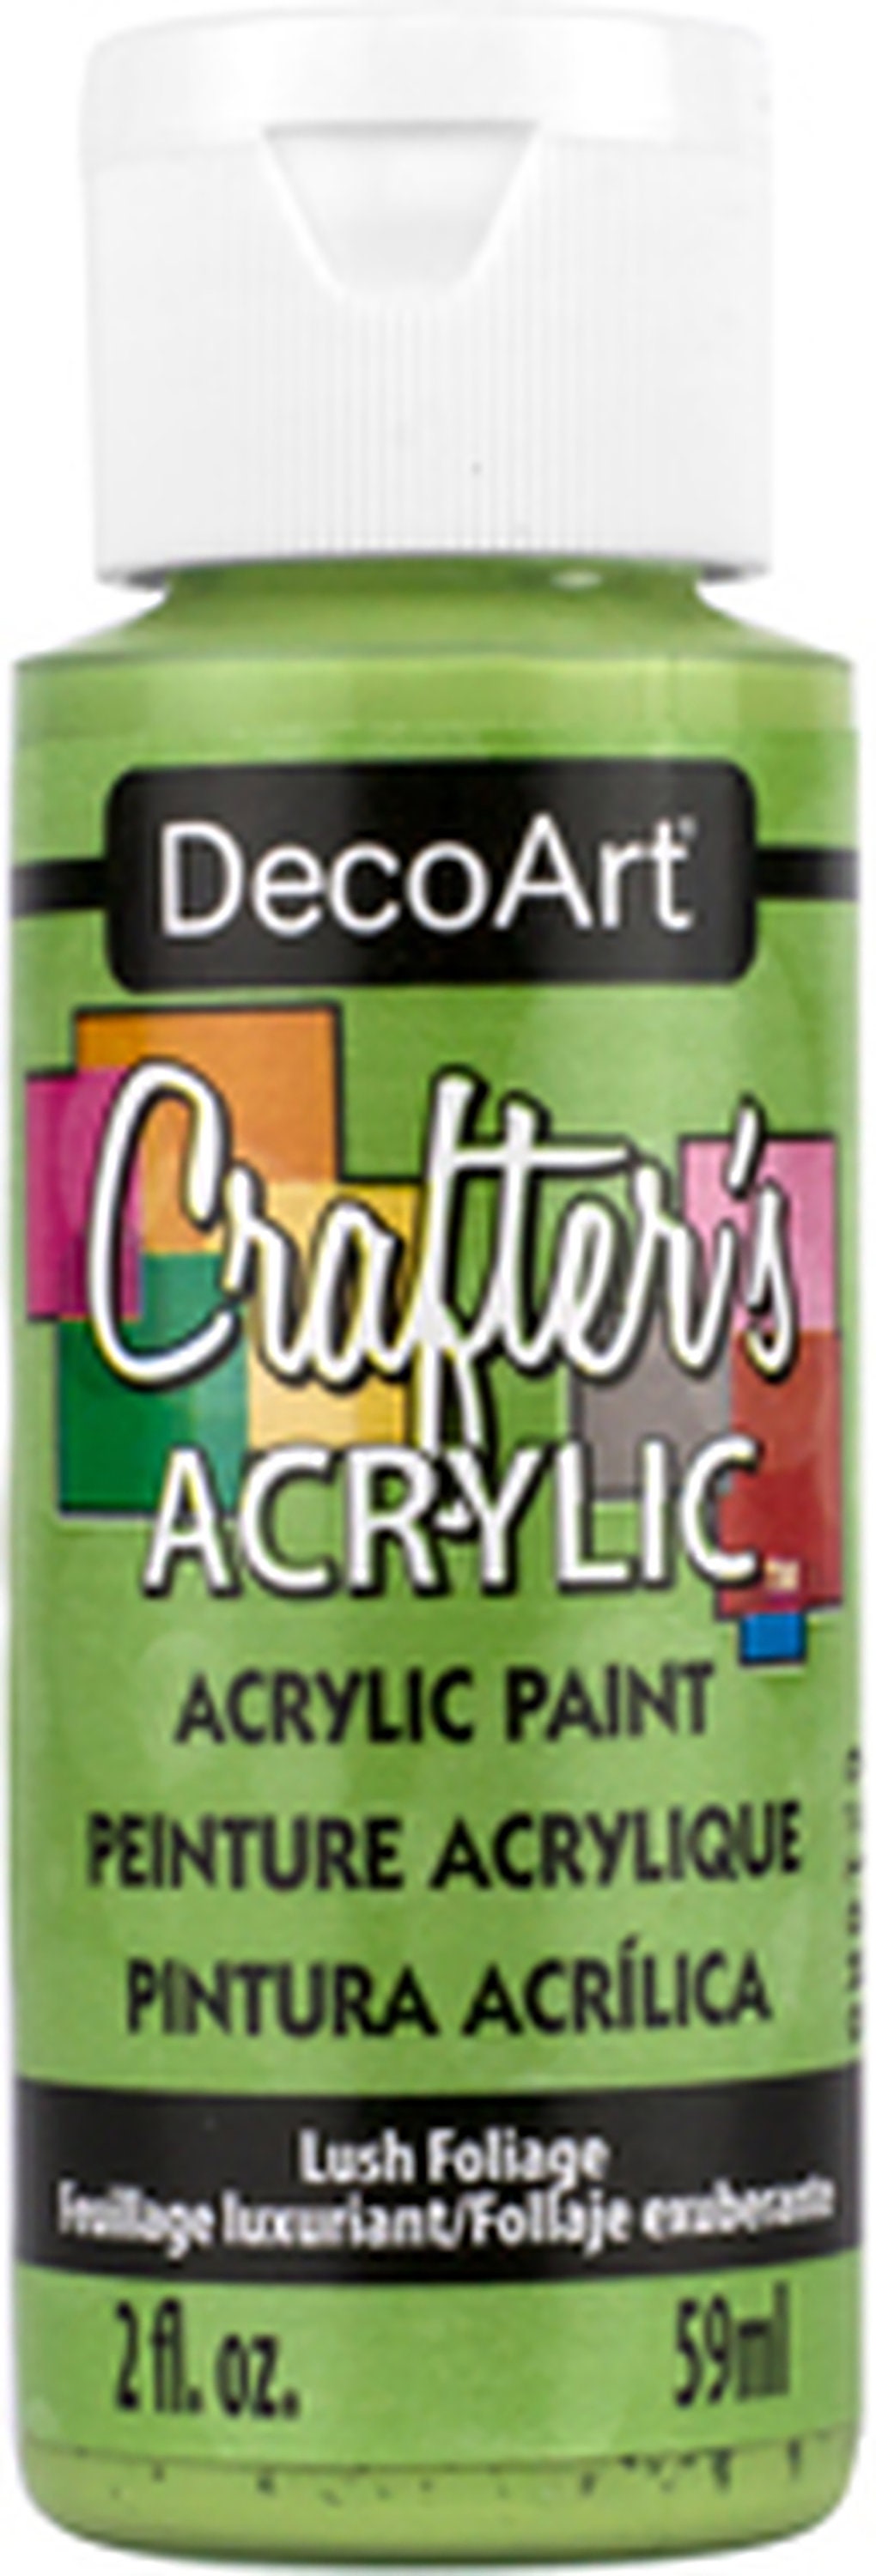 Decoart Crafters Acrylic Paints Yellow Tones 59ml 2oz -  Norway